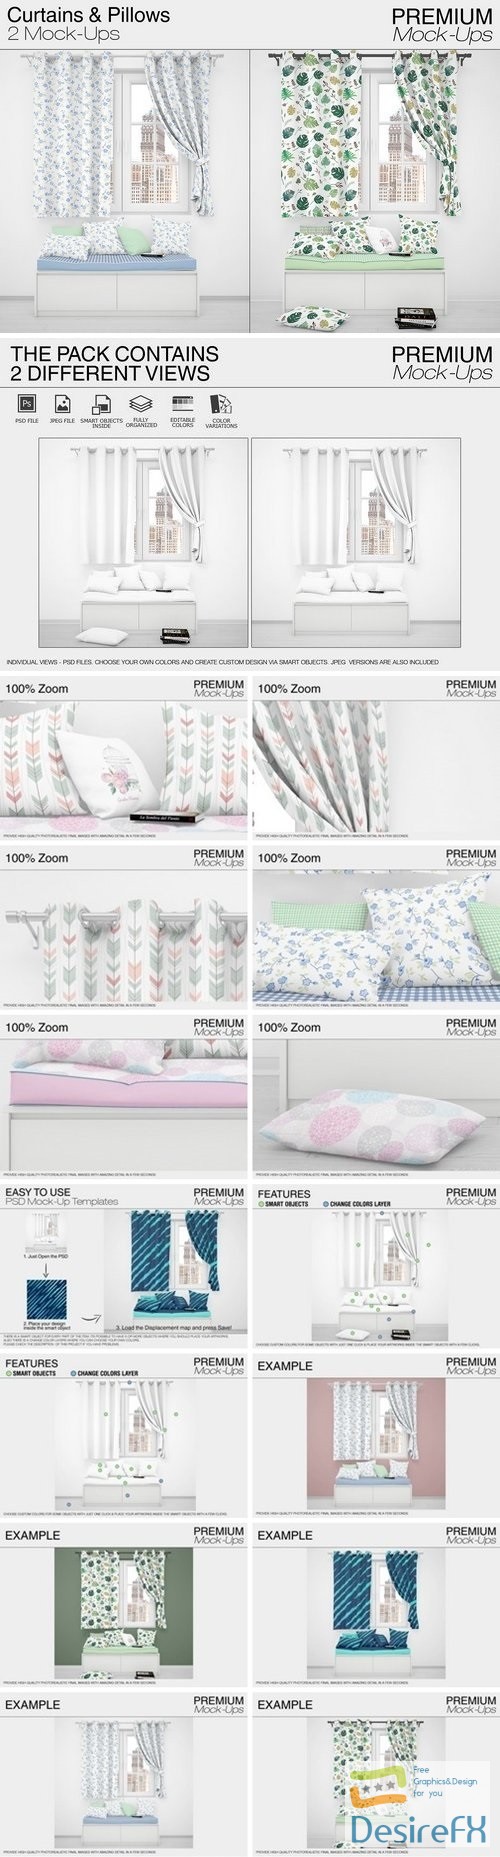 Pillows &amp; Curtains - 2024712